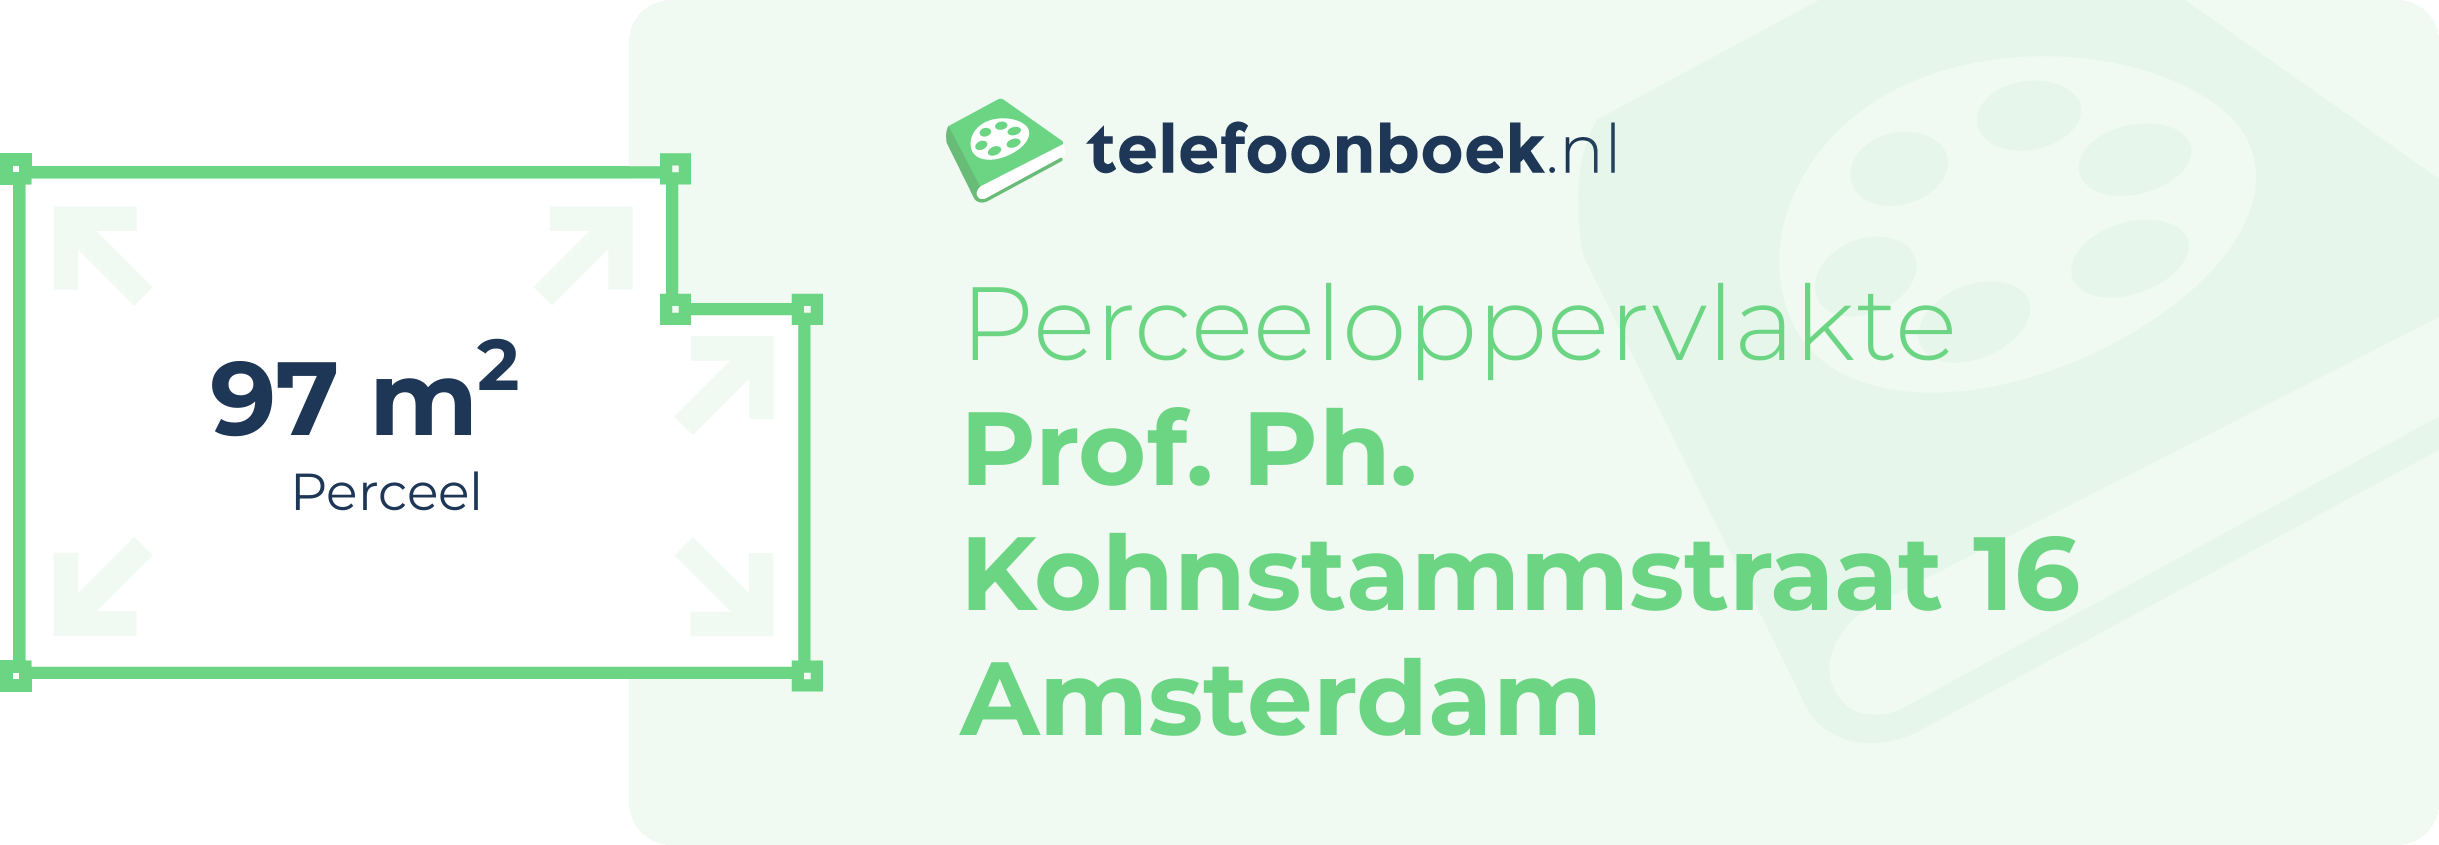 Perceeloppervlakte Prof. Ph. Kohnstammstraat 16 Amsterdam